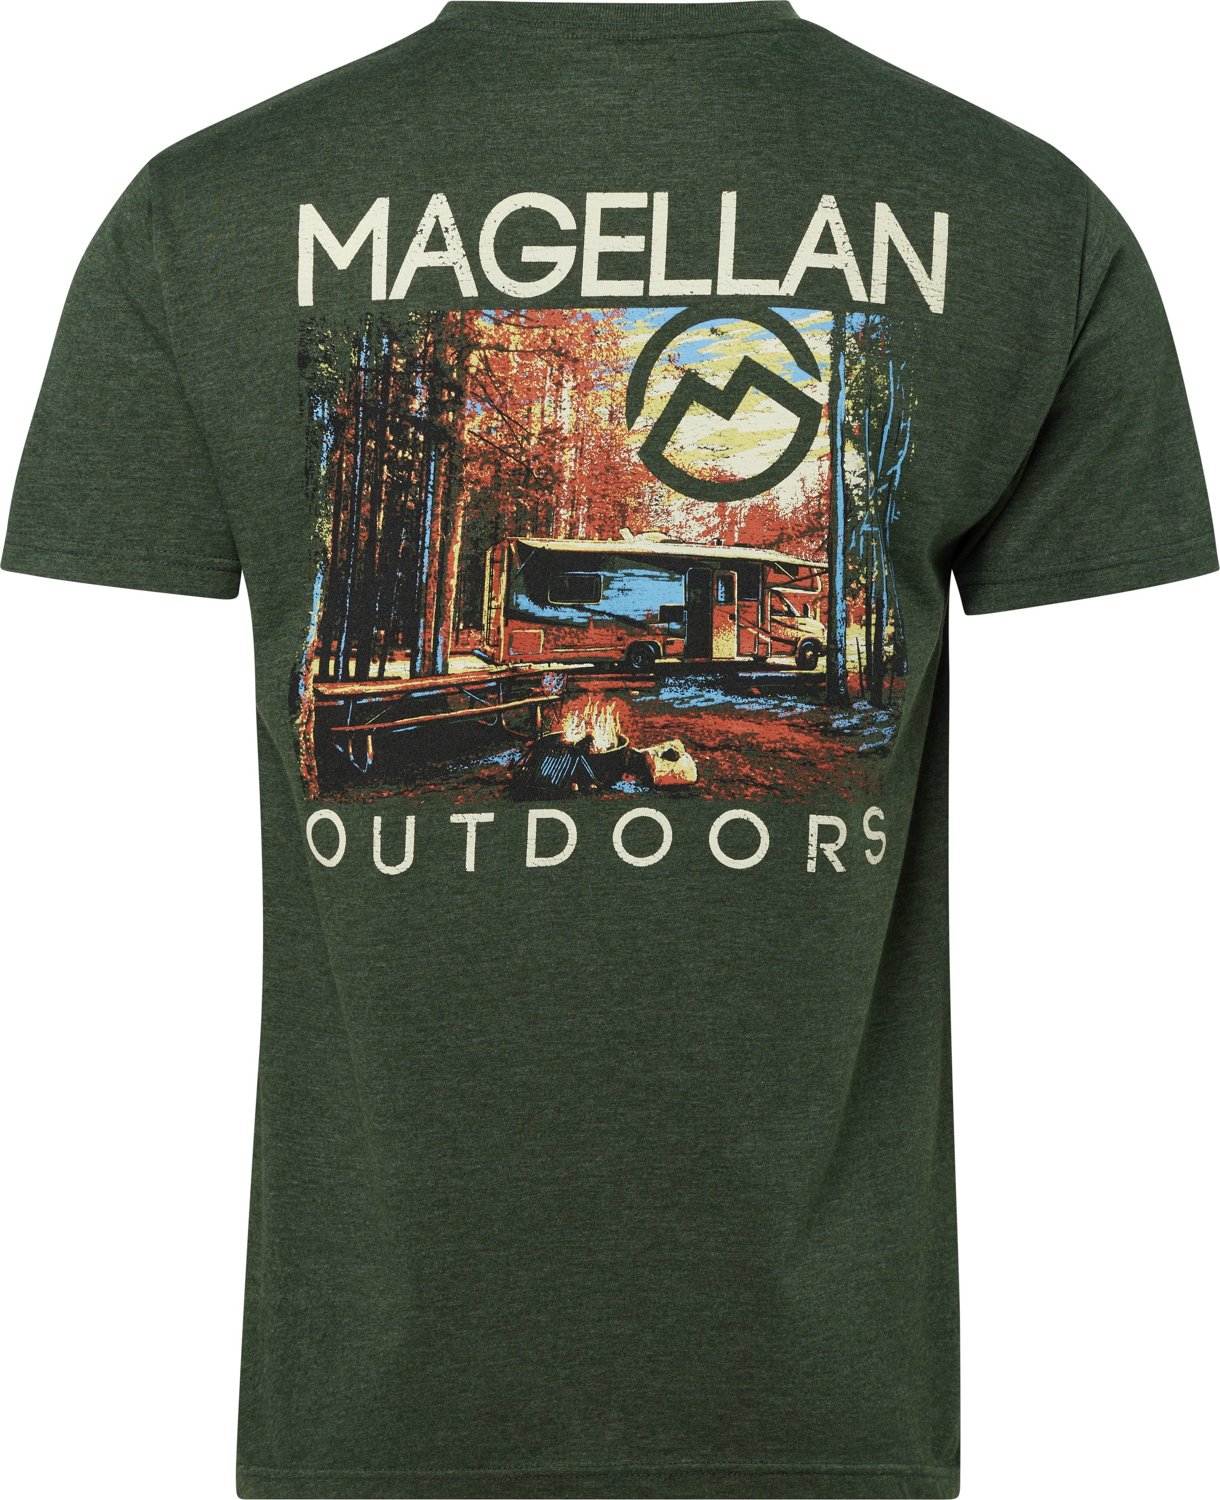 Magellan Outdoors T-Shirt Mens M Gray Fishing Lab Camp Theme Medium